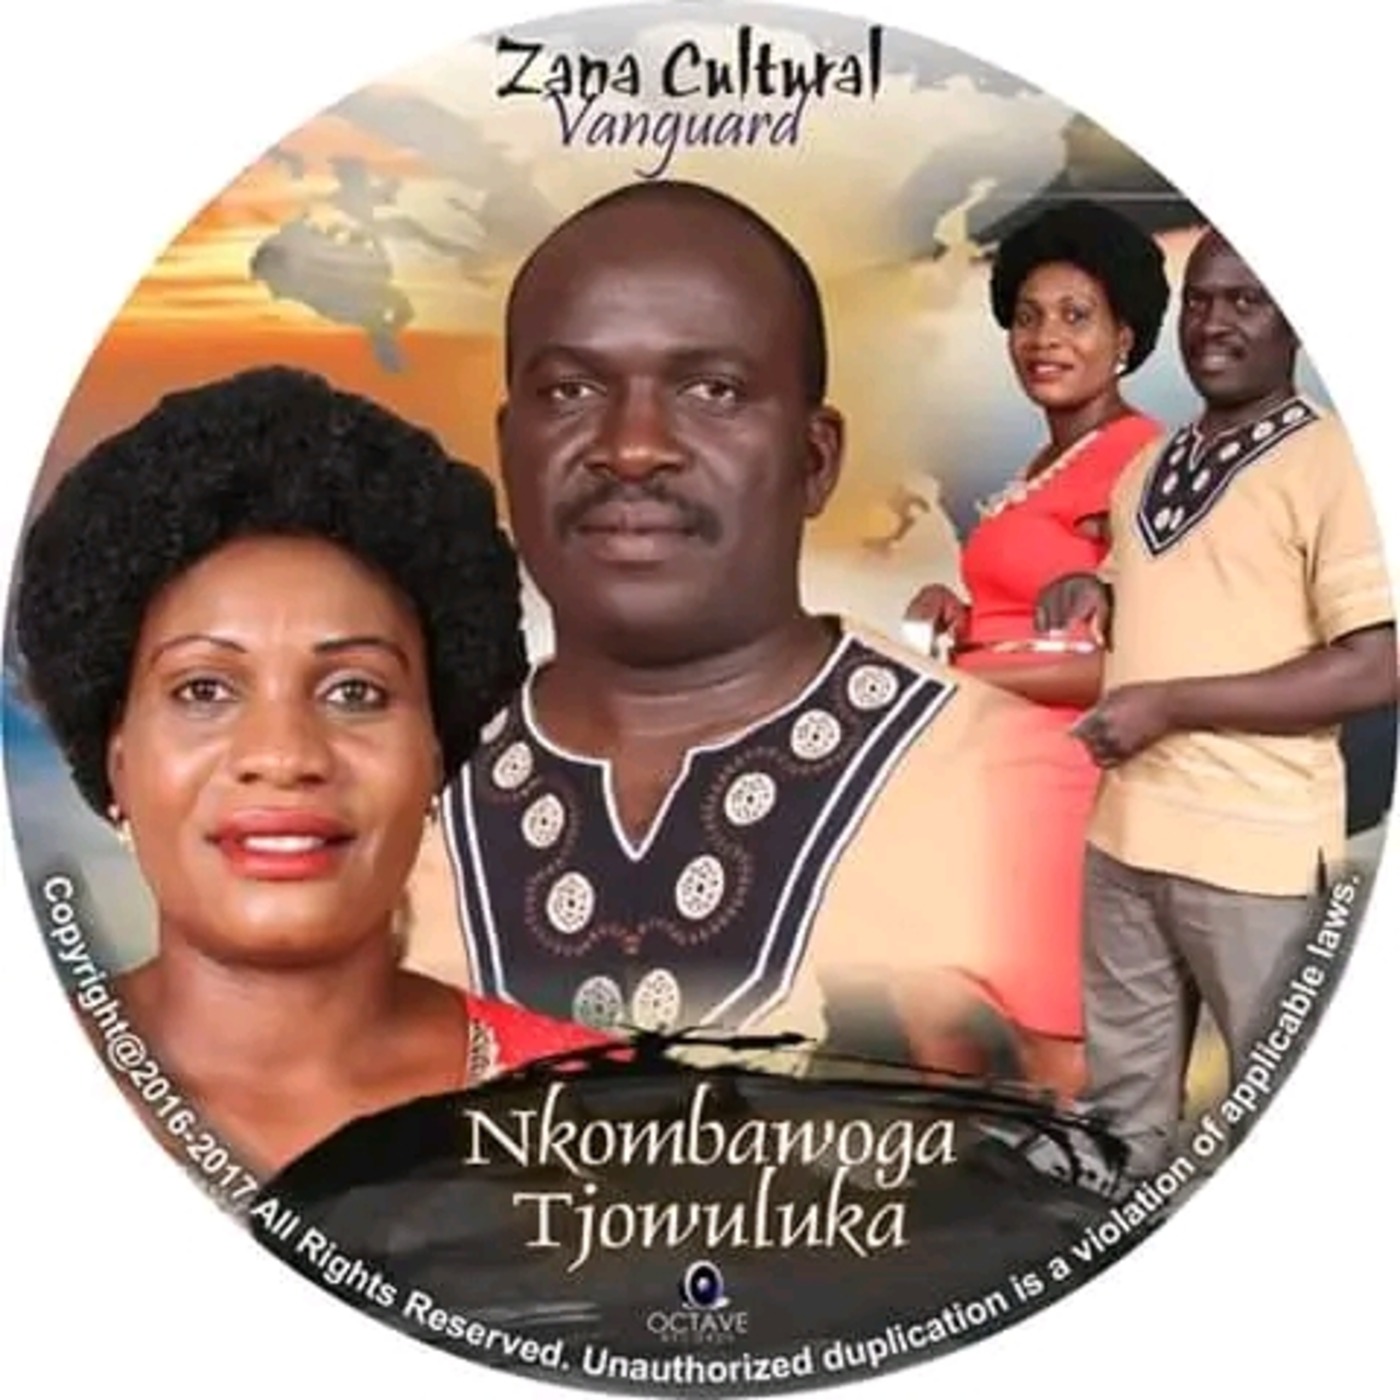 NKOMBAWOGA TJOWULUKA by Zana Cultural Vanguard | Album